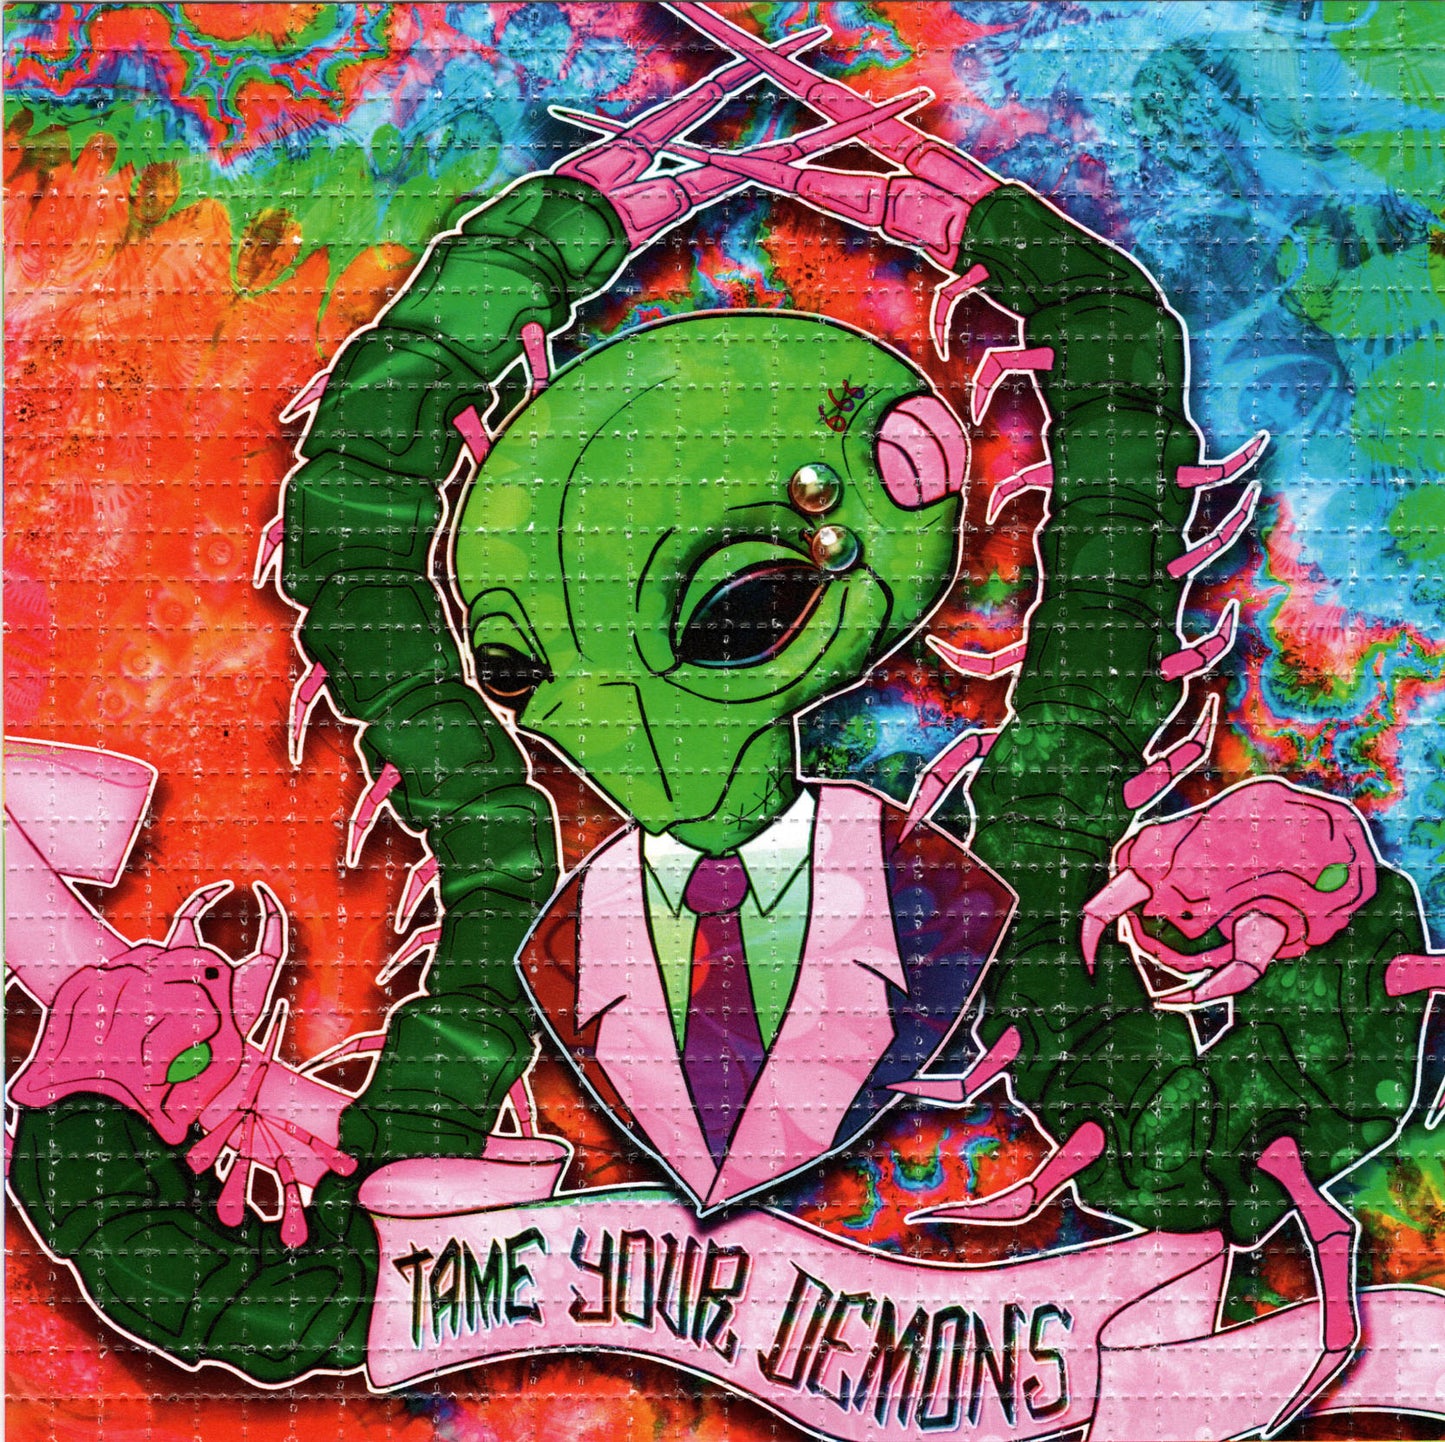 Tame Your Demons by Vini Kiniki SIGNED Limited Edition LSD blotter art print